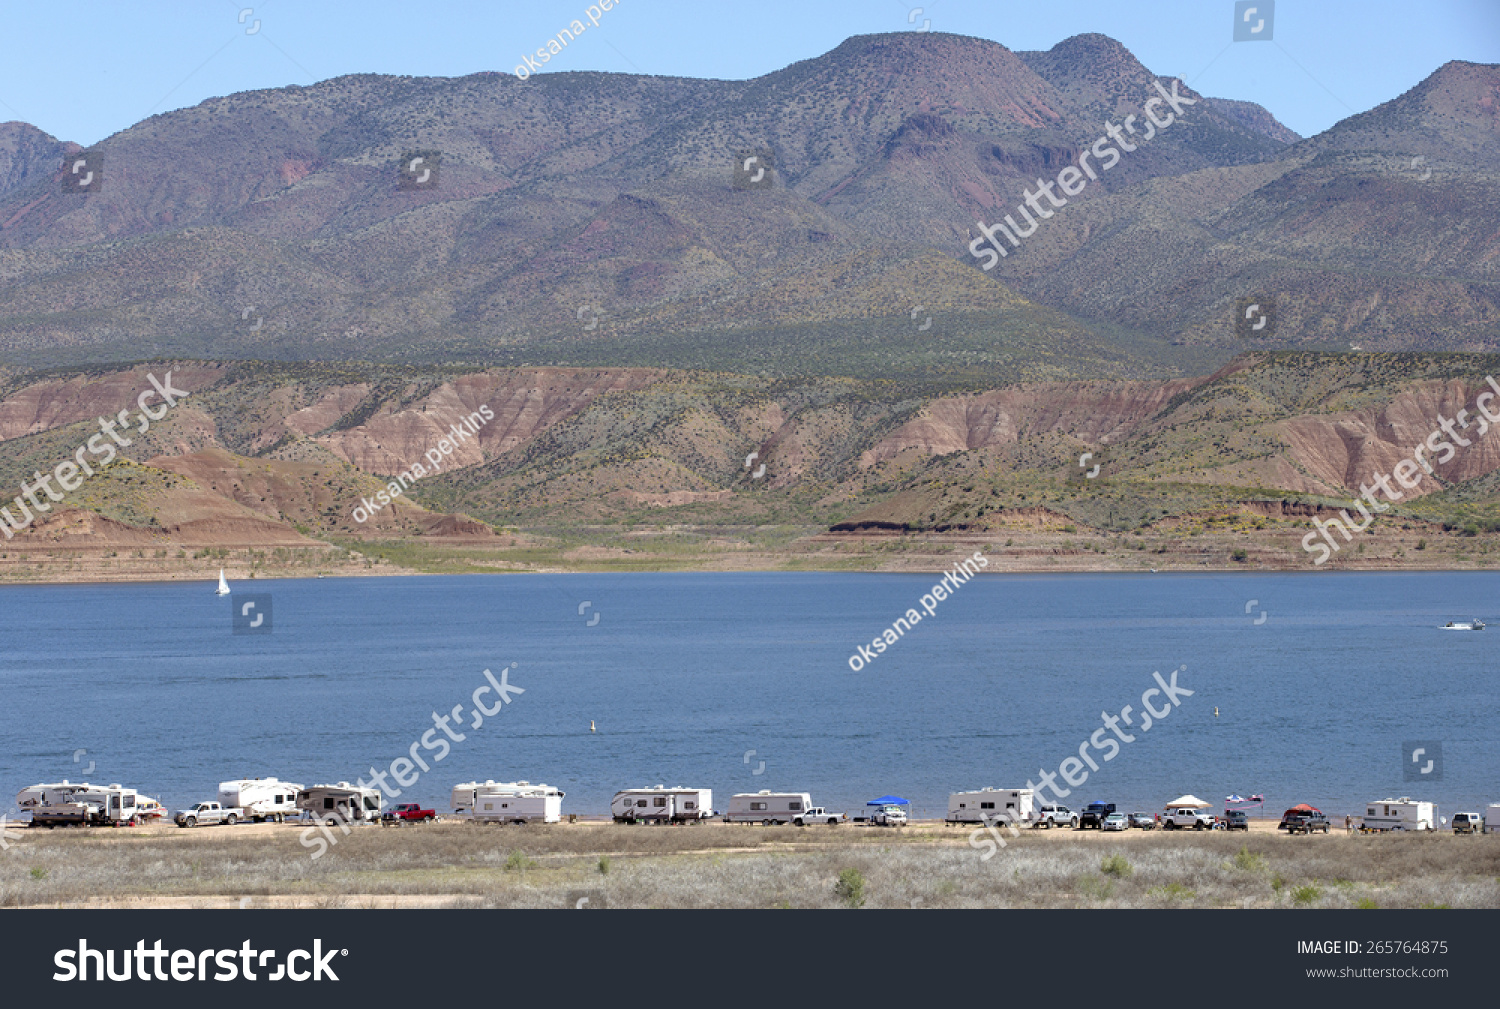 Camping on shores of Roosevelt Lake in Arizona, USA #265764875